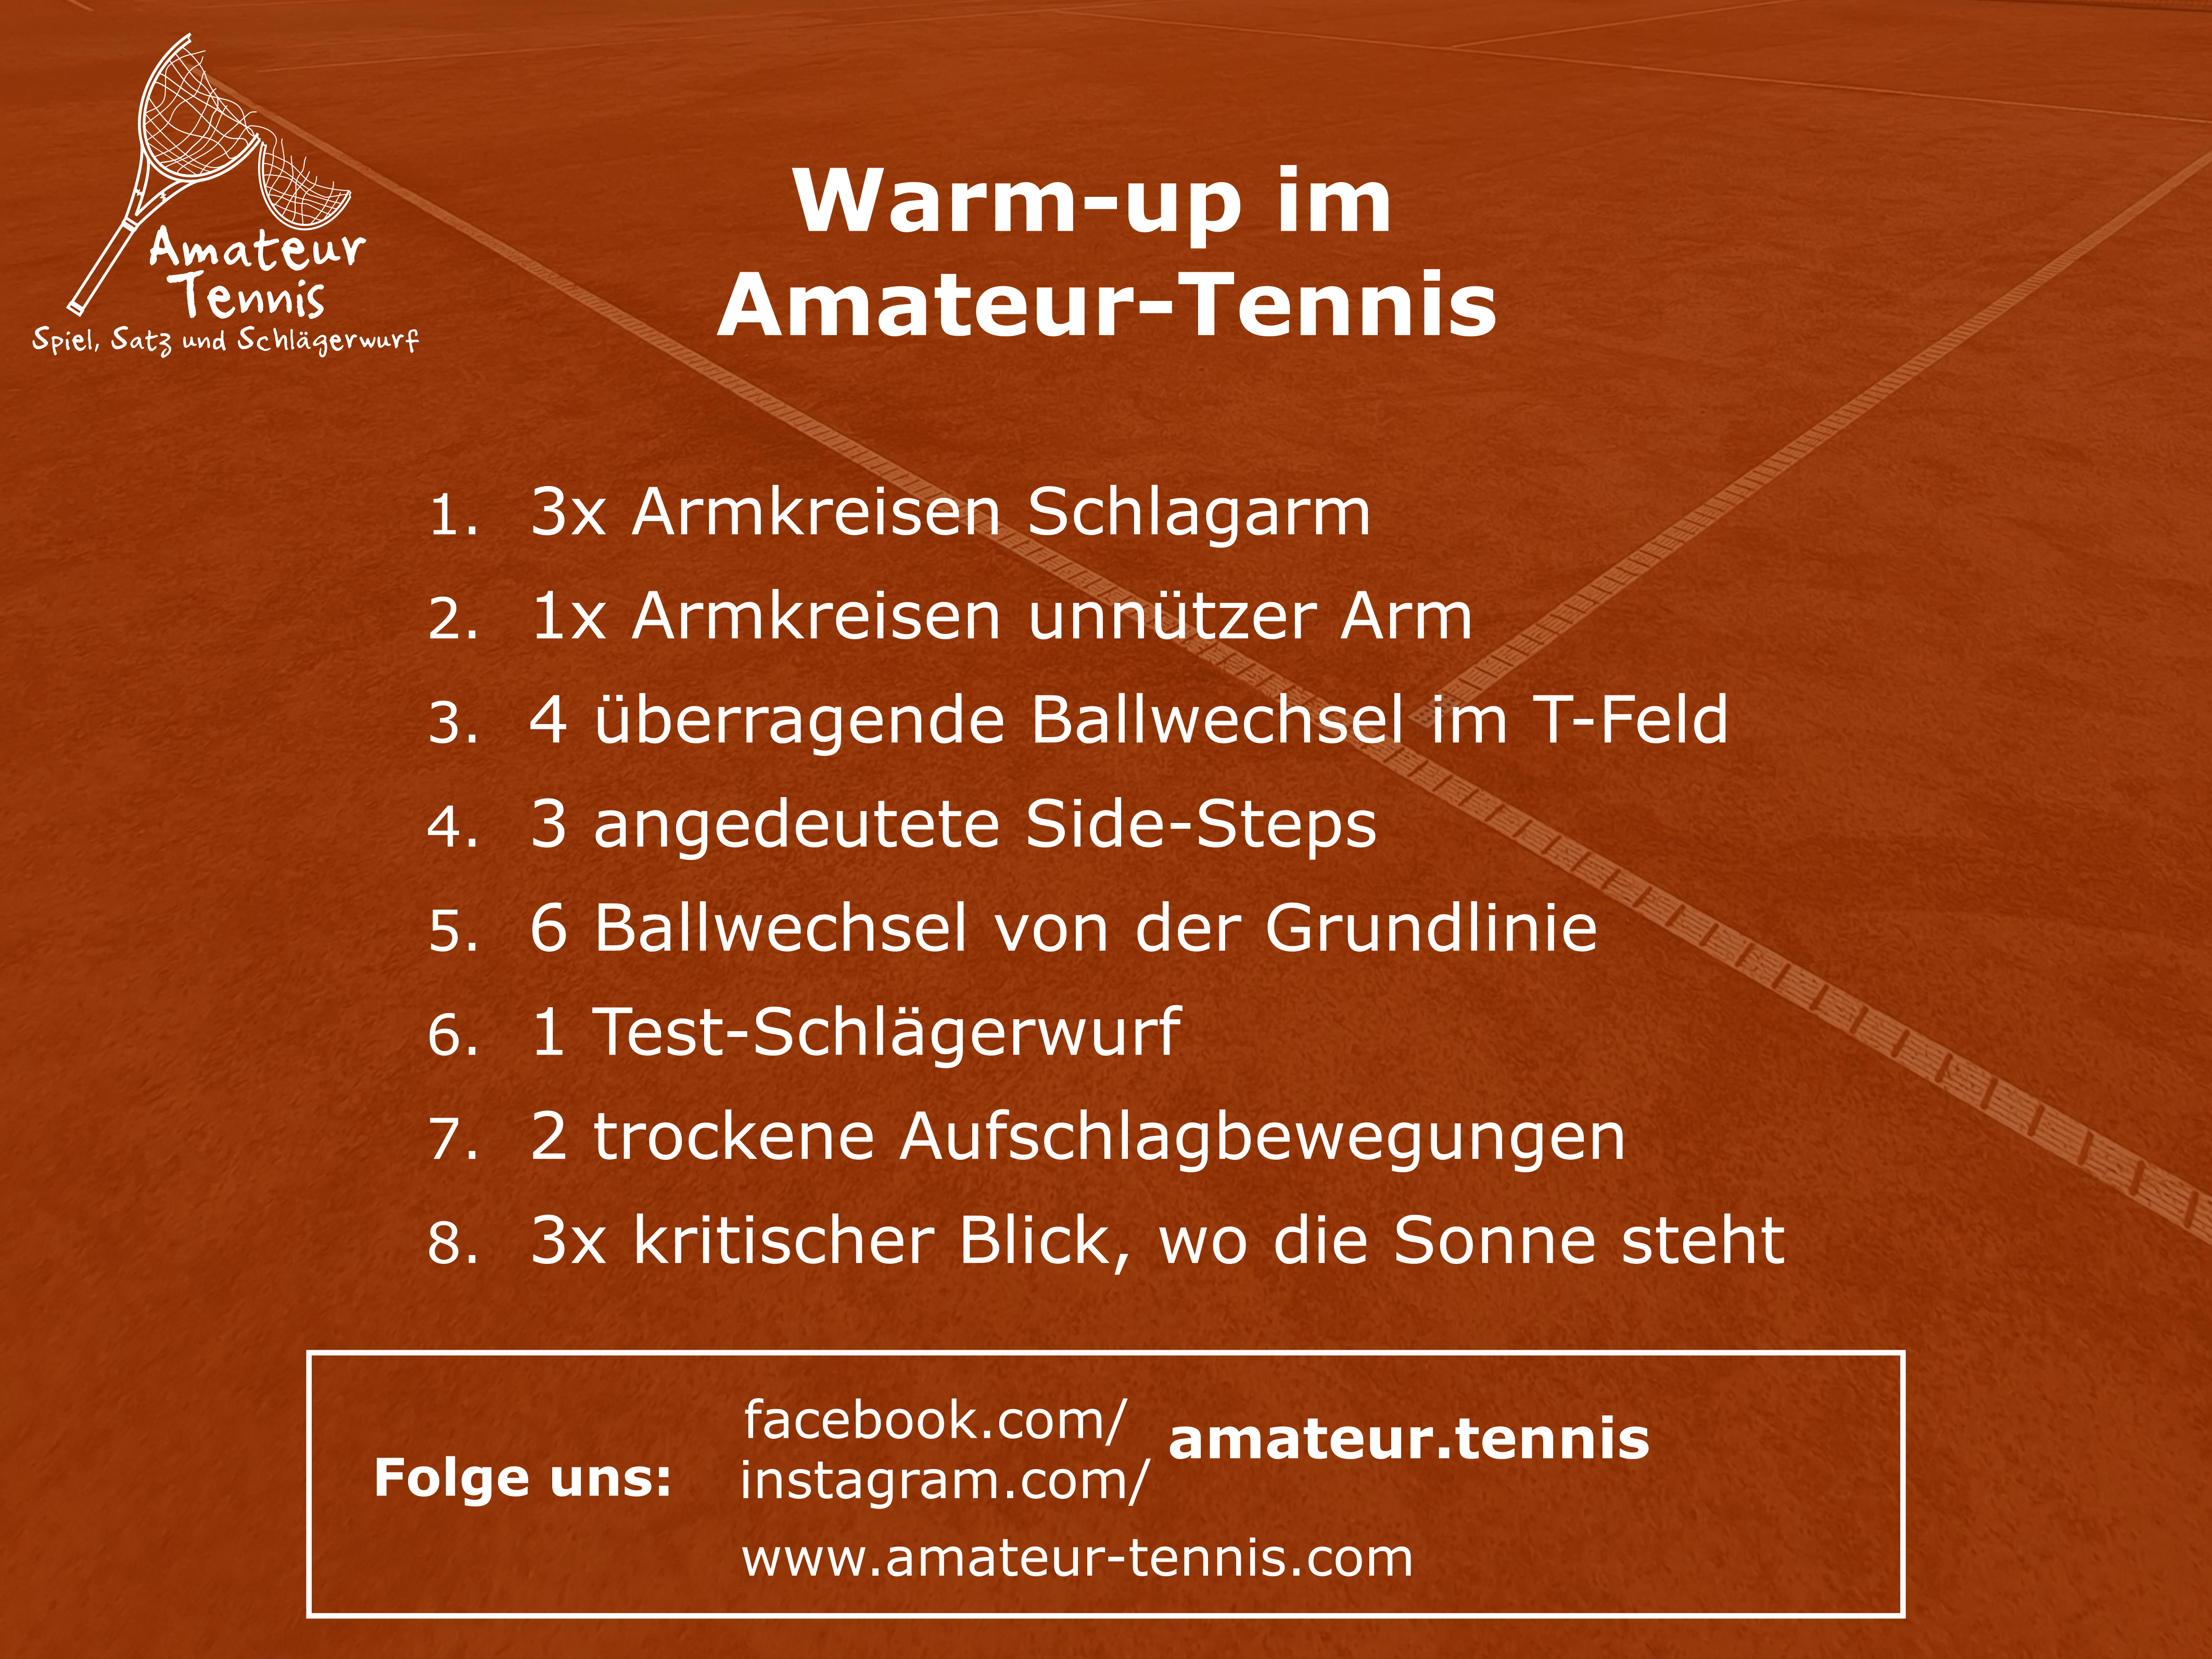 Warm-up im Amateur-Tennis